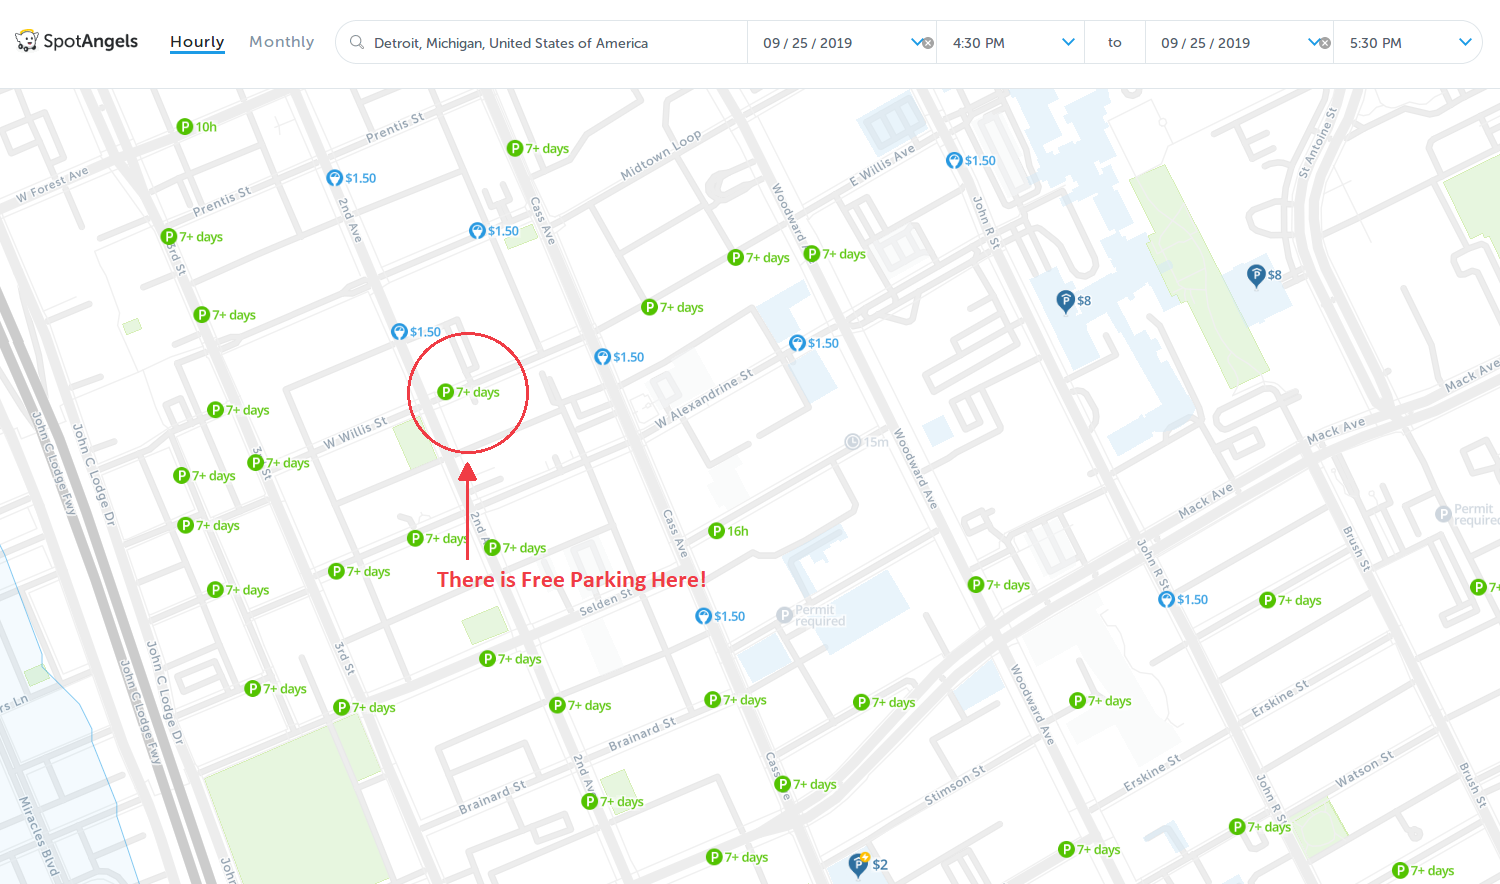 map of free parking in Detroit - SpotAngels